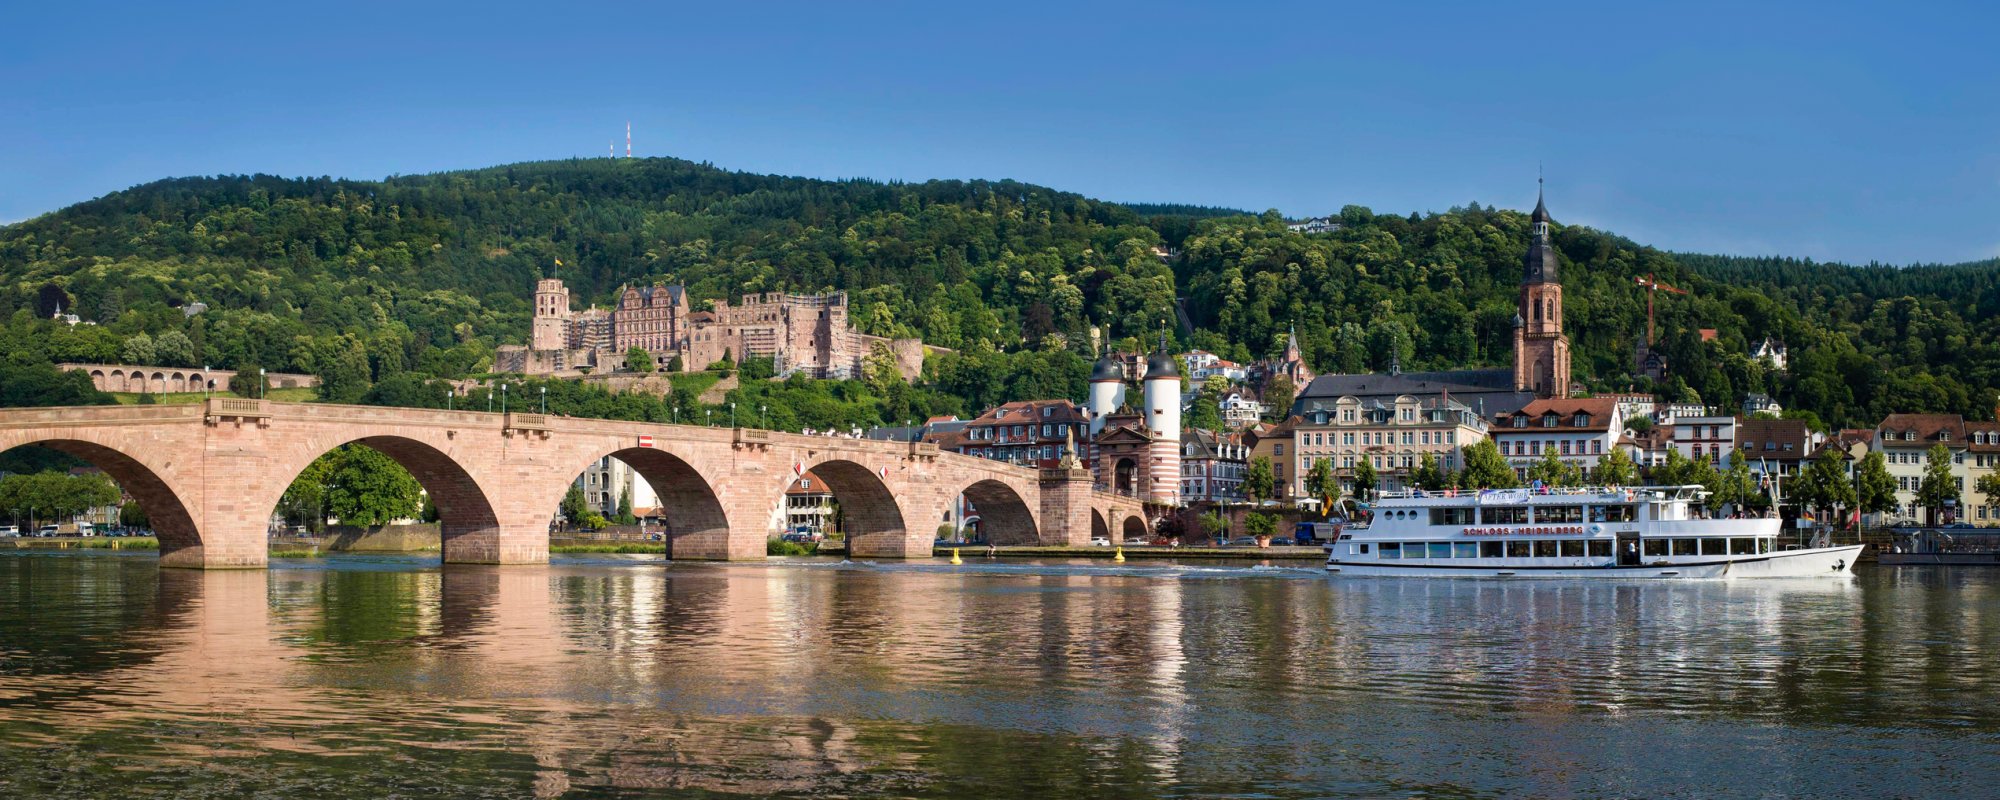 Neckarpanorama - Heidelberg